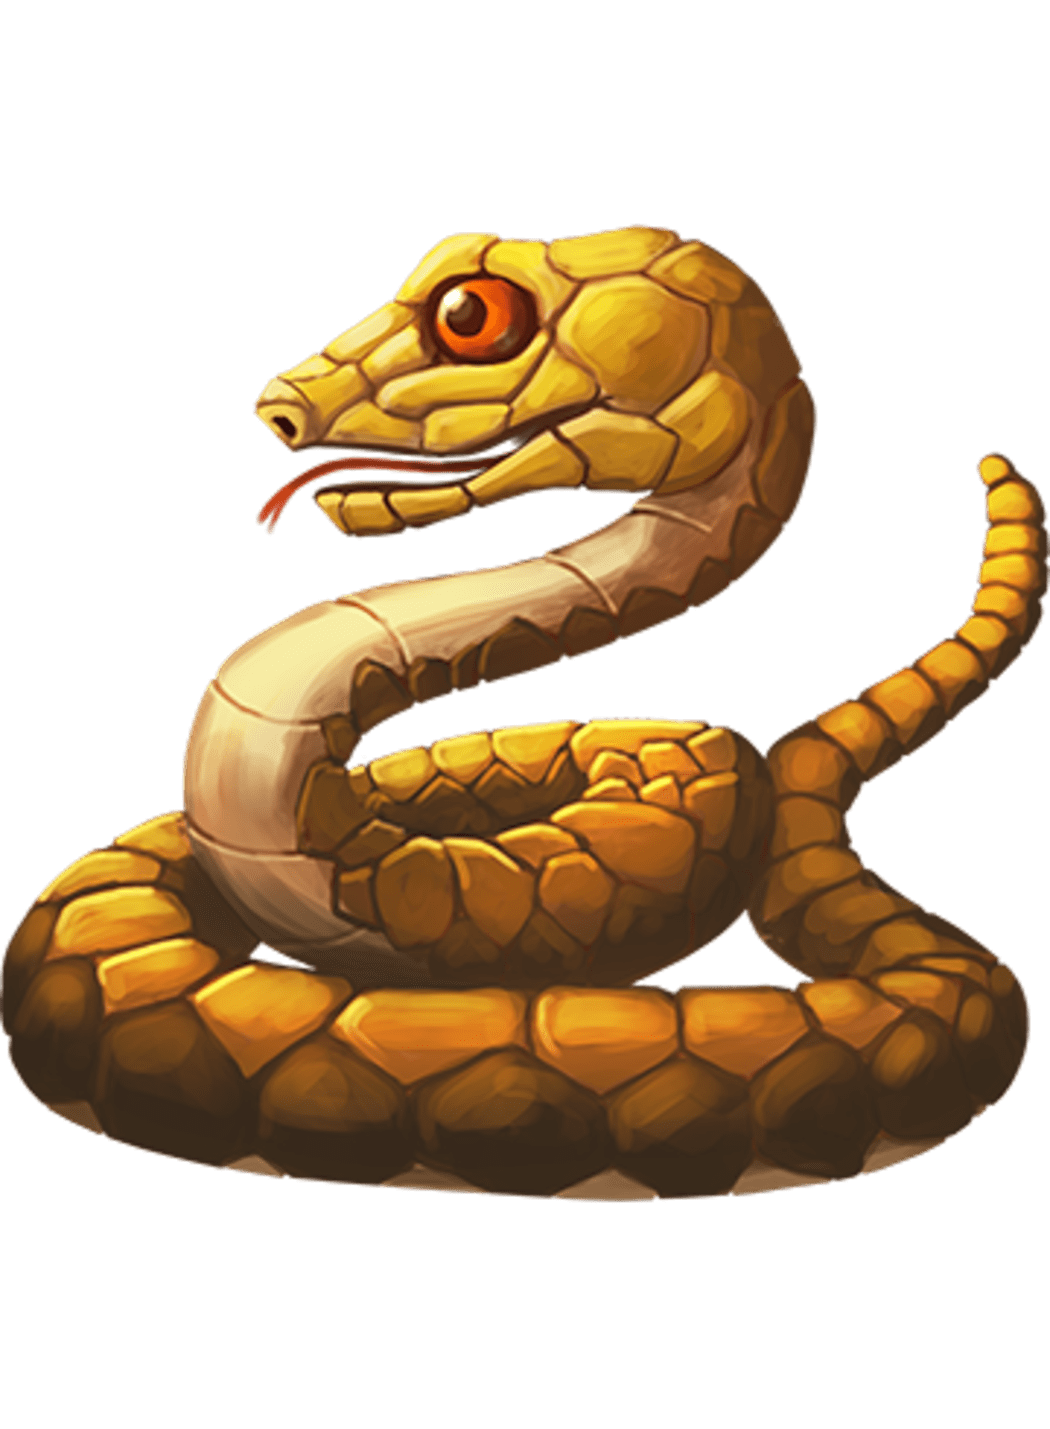 Classic Snake Adventures for Nintendo